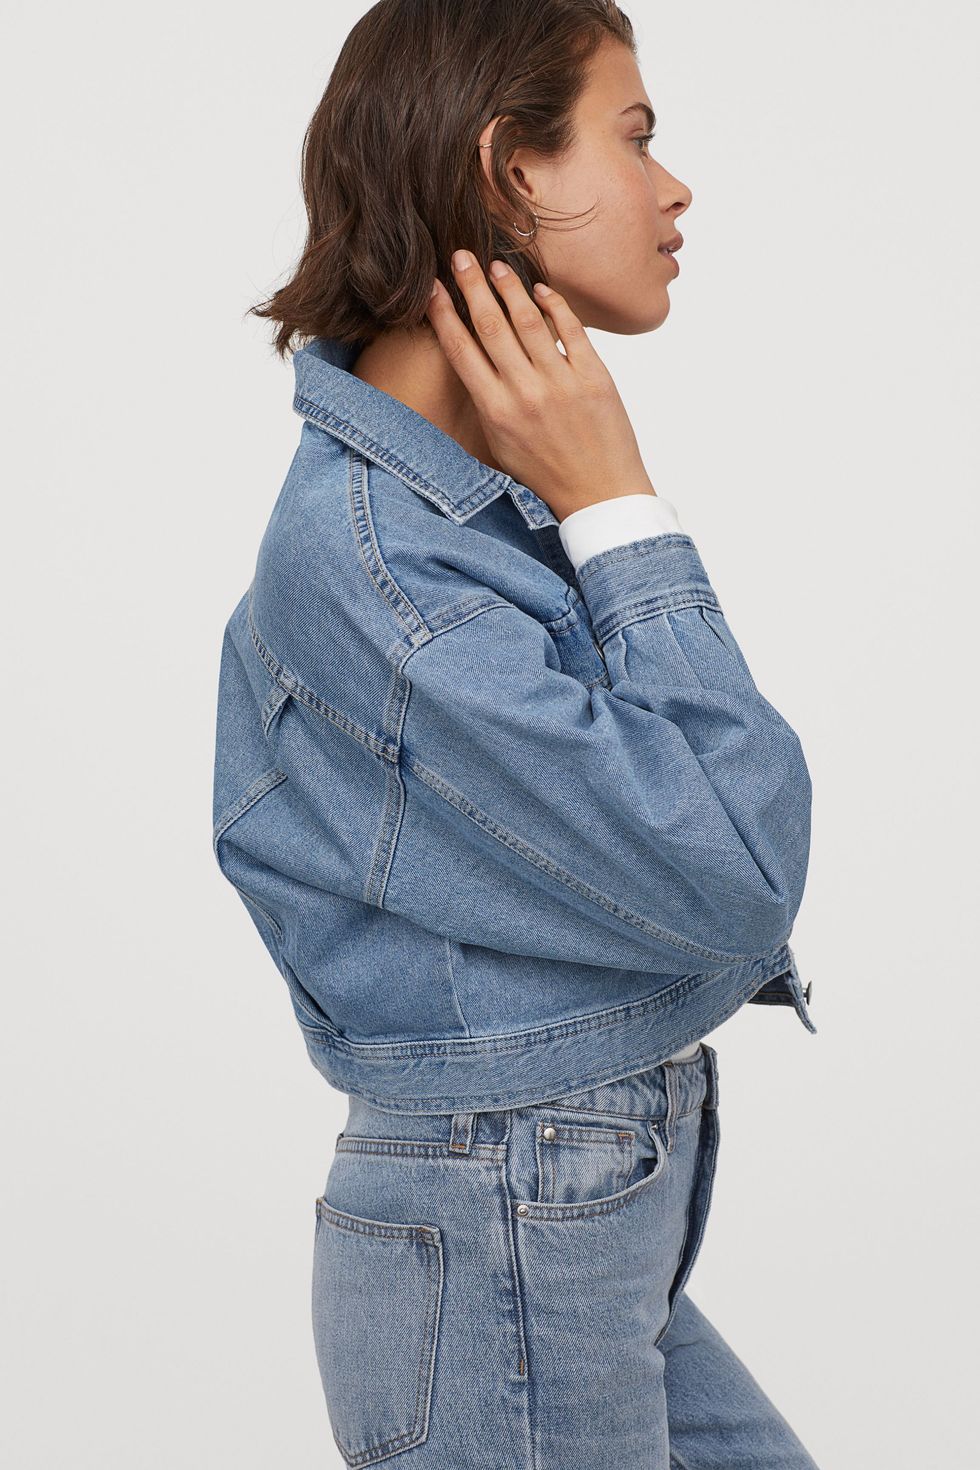 10 Oversized Denim Jacket Styles - Denim Jackets for Women